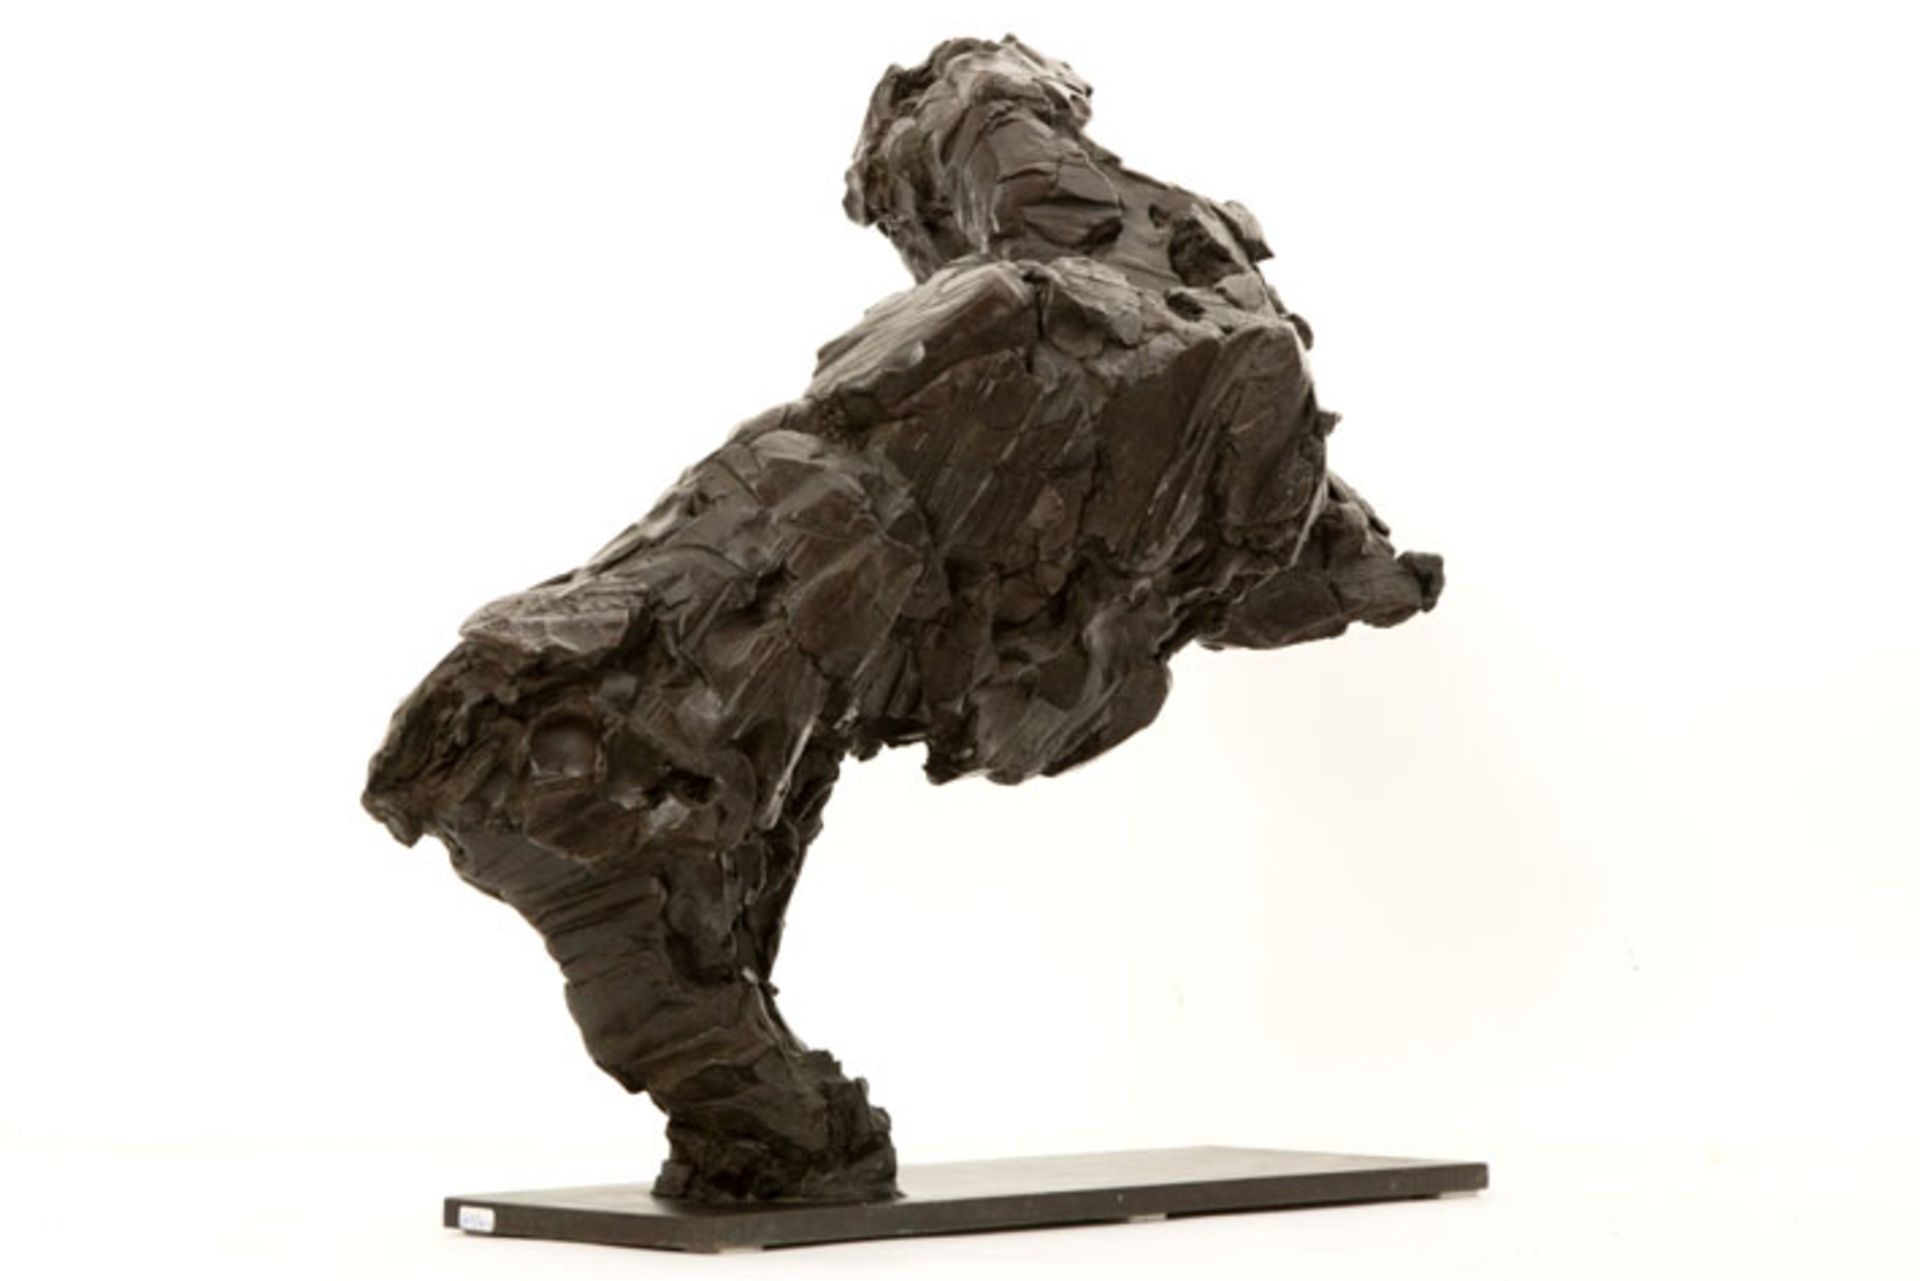 20th Cent. Belgian sculpture in bronze - signed Patrick Villas - - VILLAS PATRICK [...] - Image 4 of 5